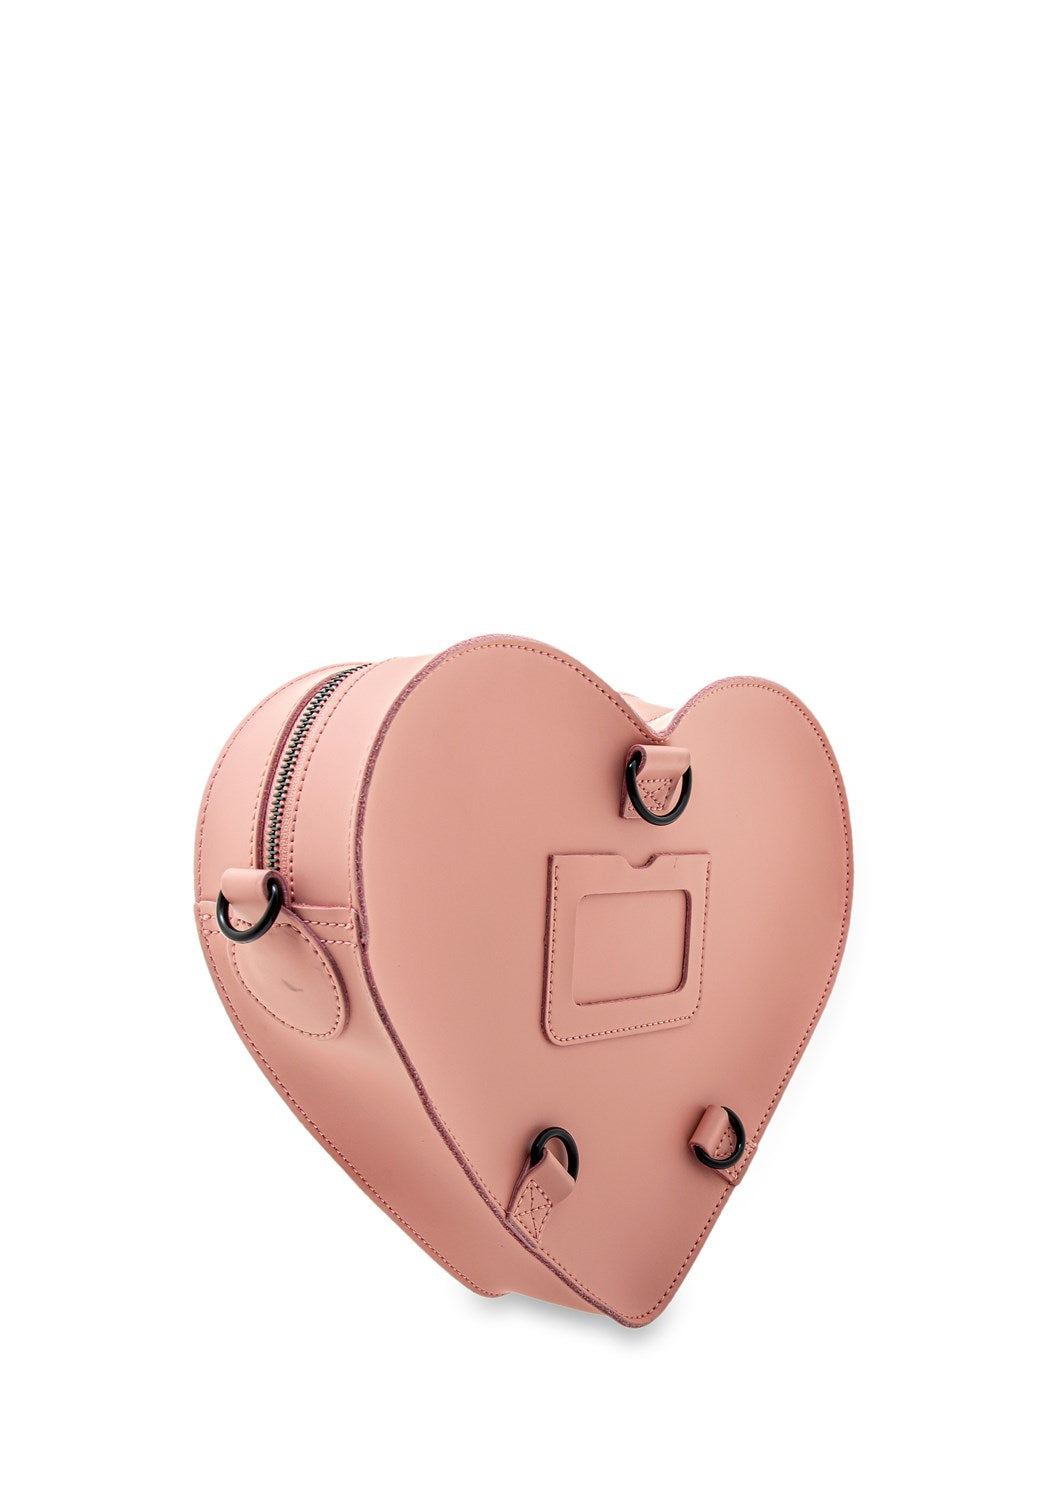 Heart Backpack peach | Bildmaterial bereitgestellt von SHOES.PLEASE.